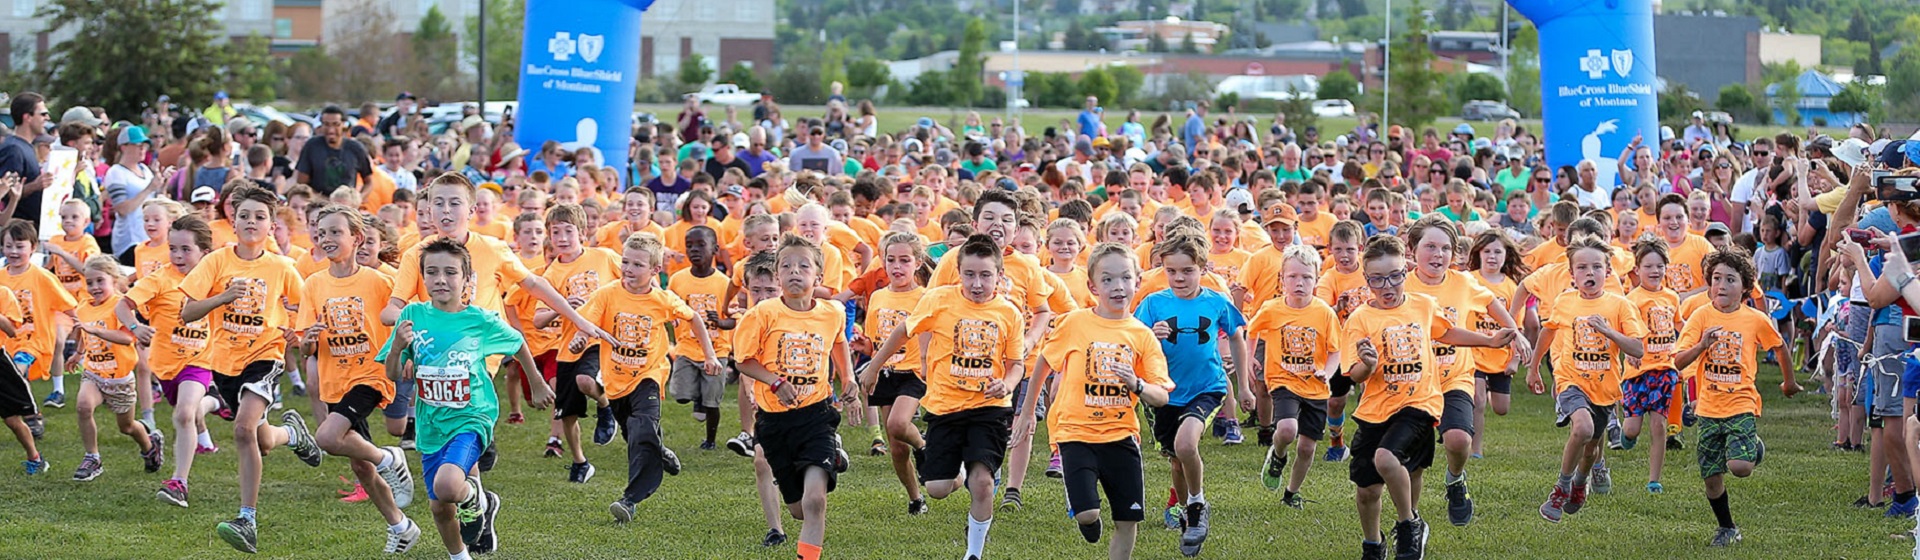 Montana Governor's Cup Kids Marathon